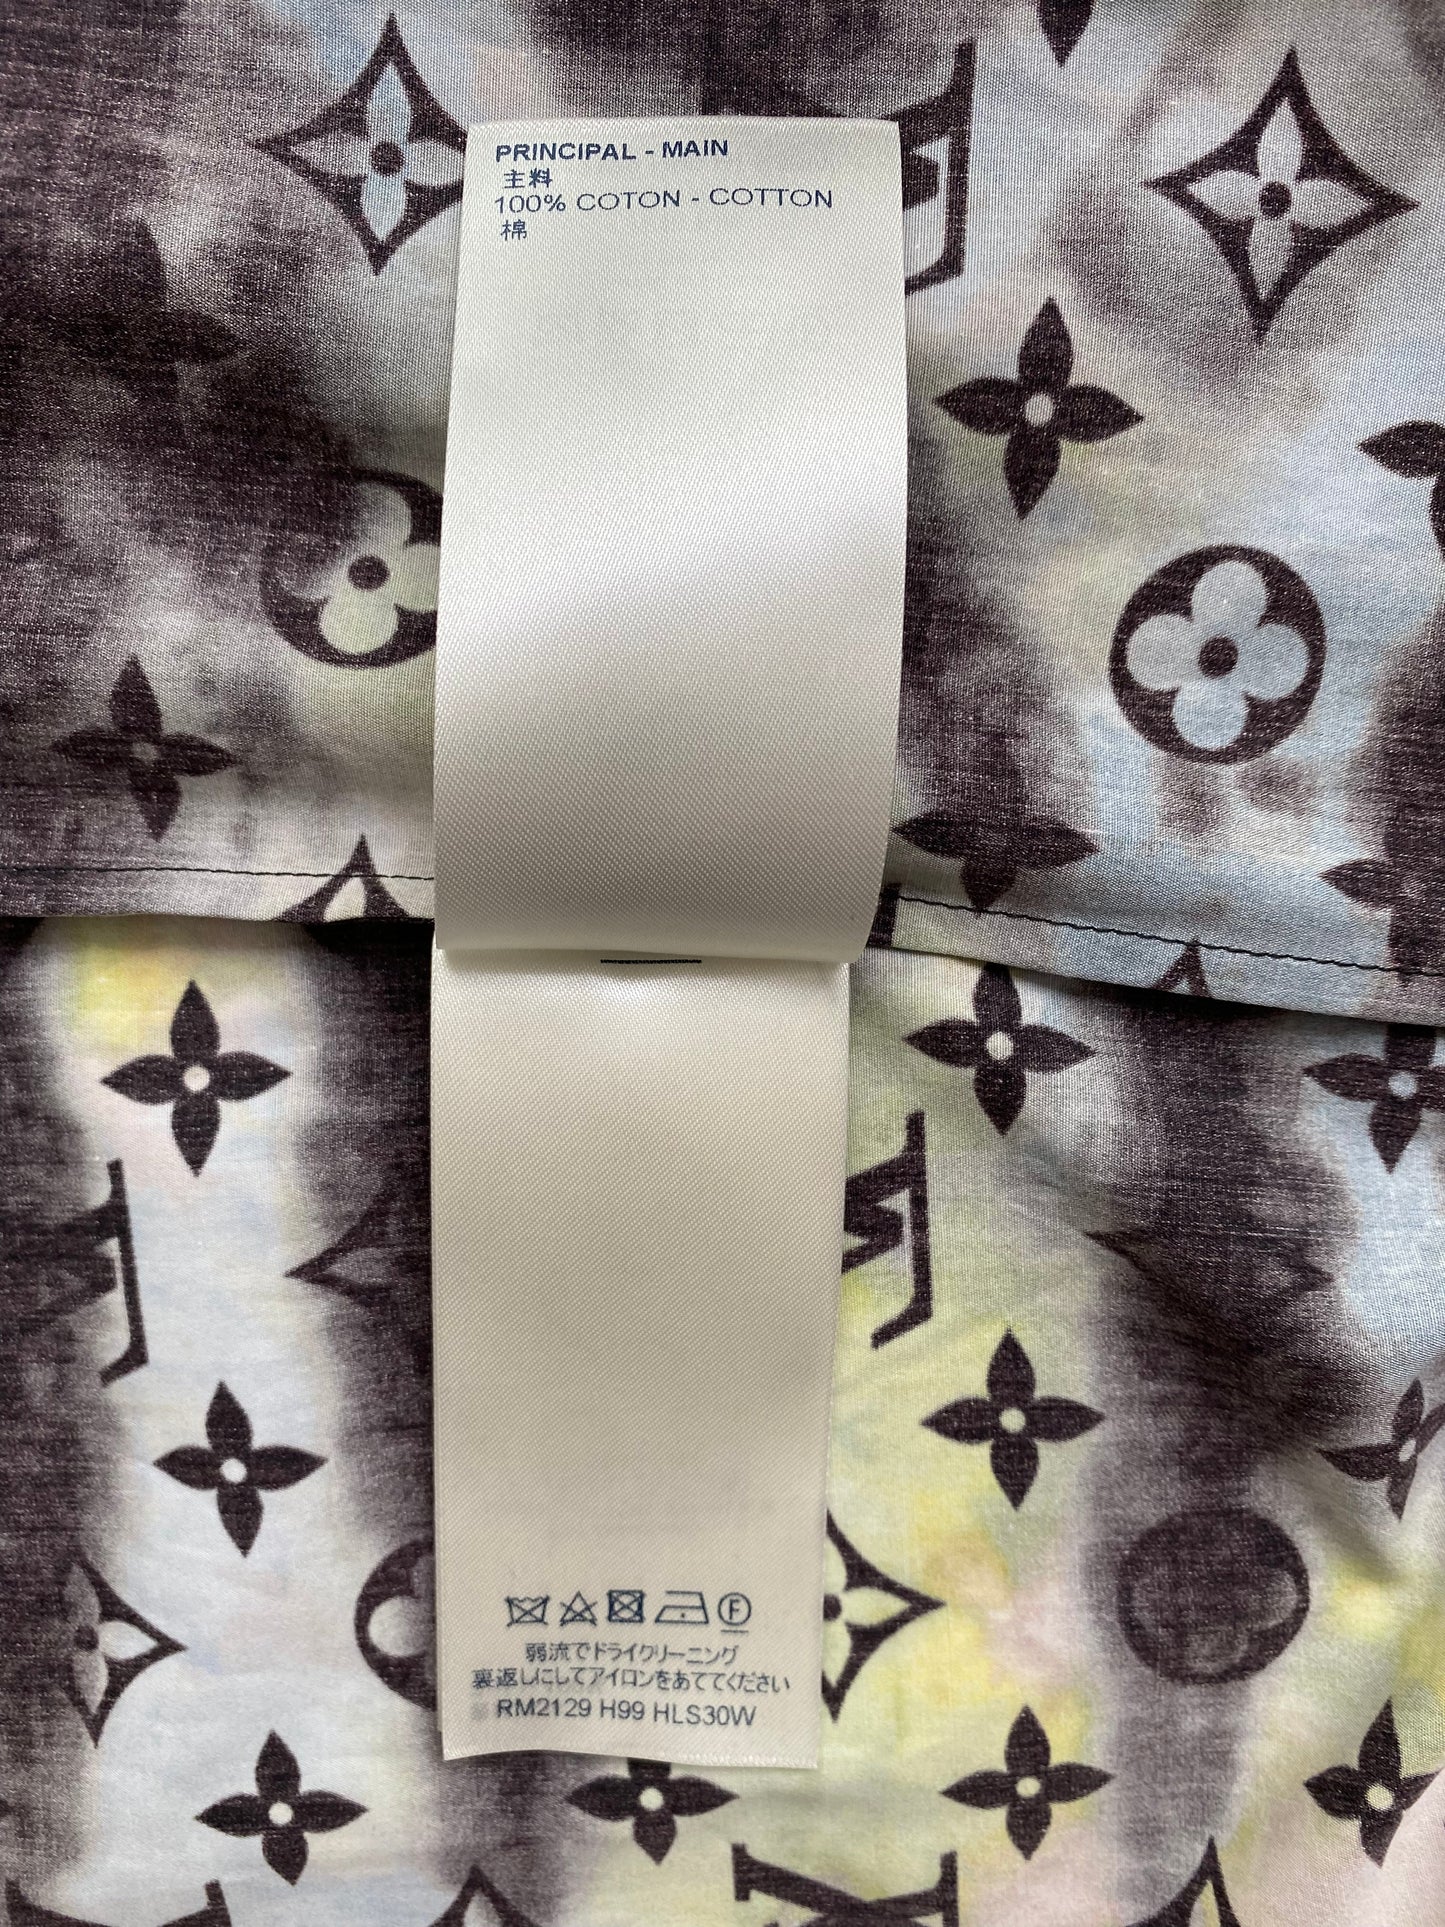 Louis Vuitton Tie Dye Monogram Shirt Multico. Size 42